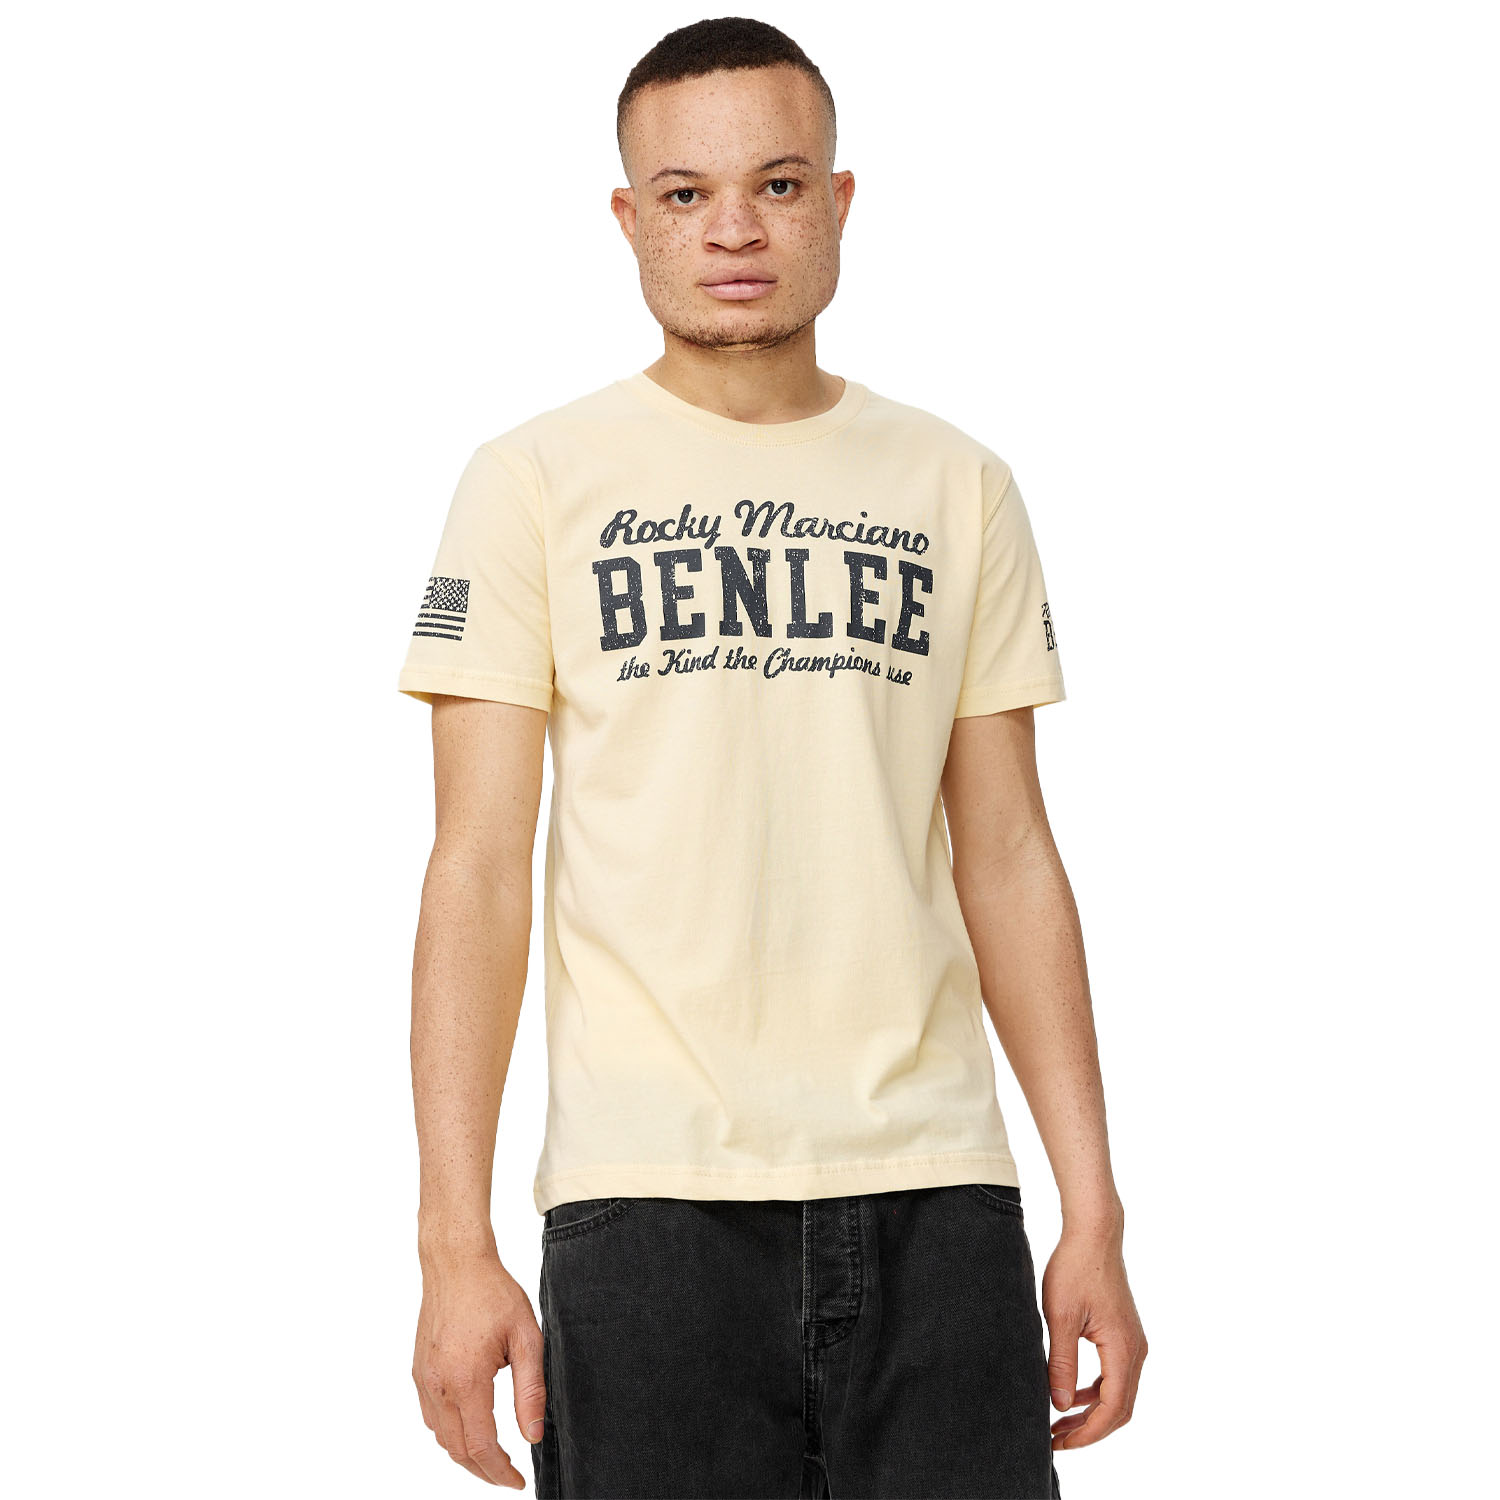 BENLEE T-Shirt, Lorenzo, beige